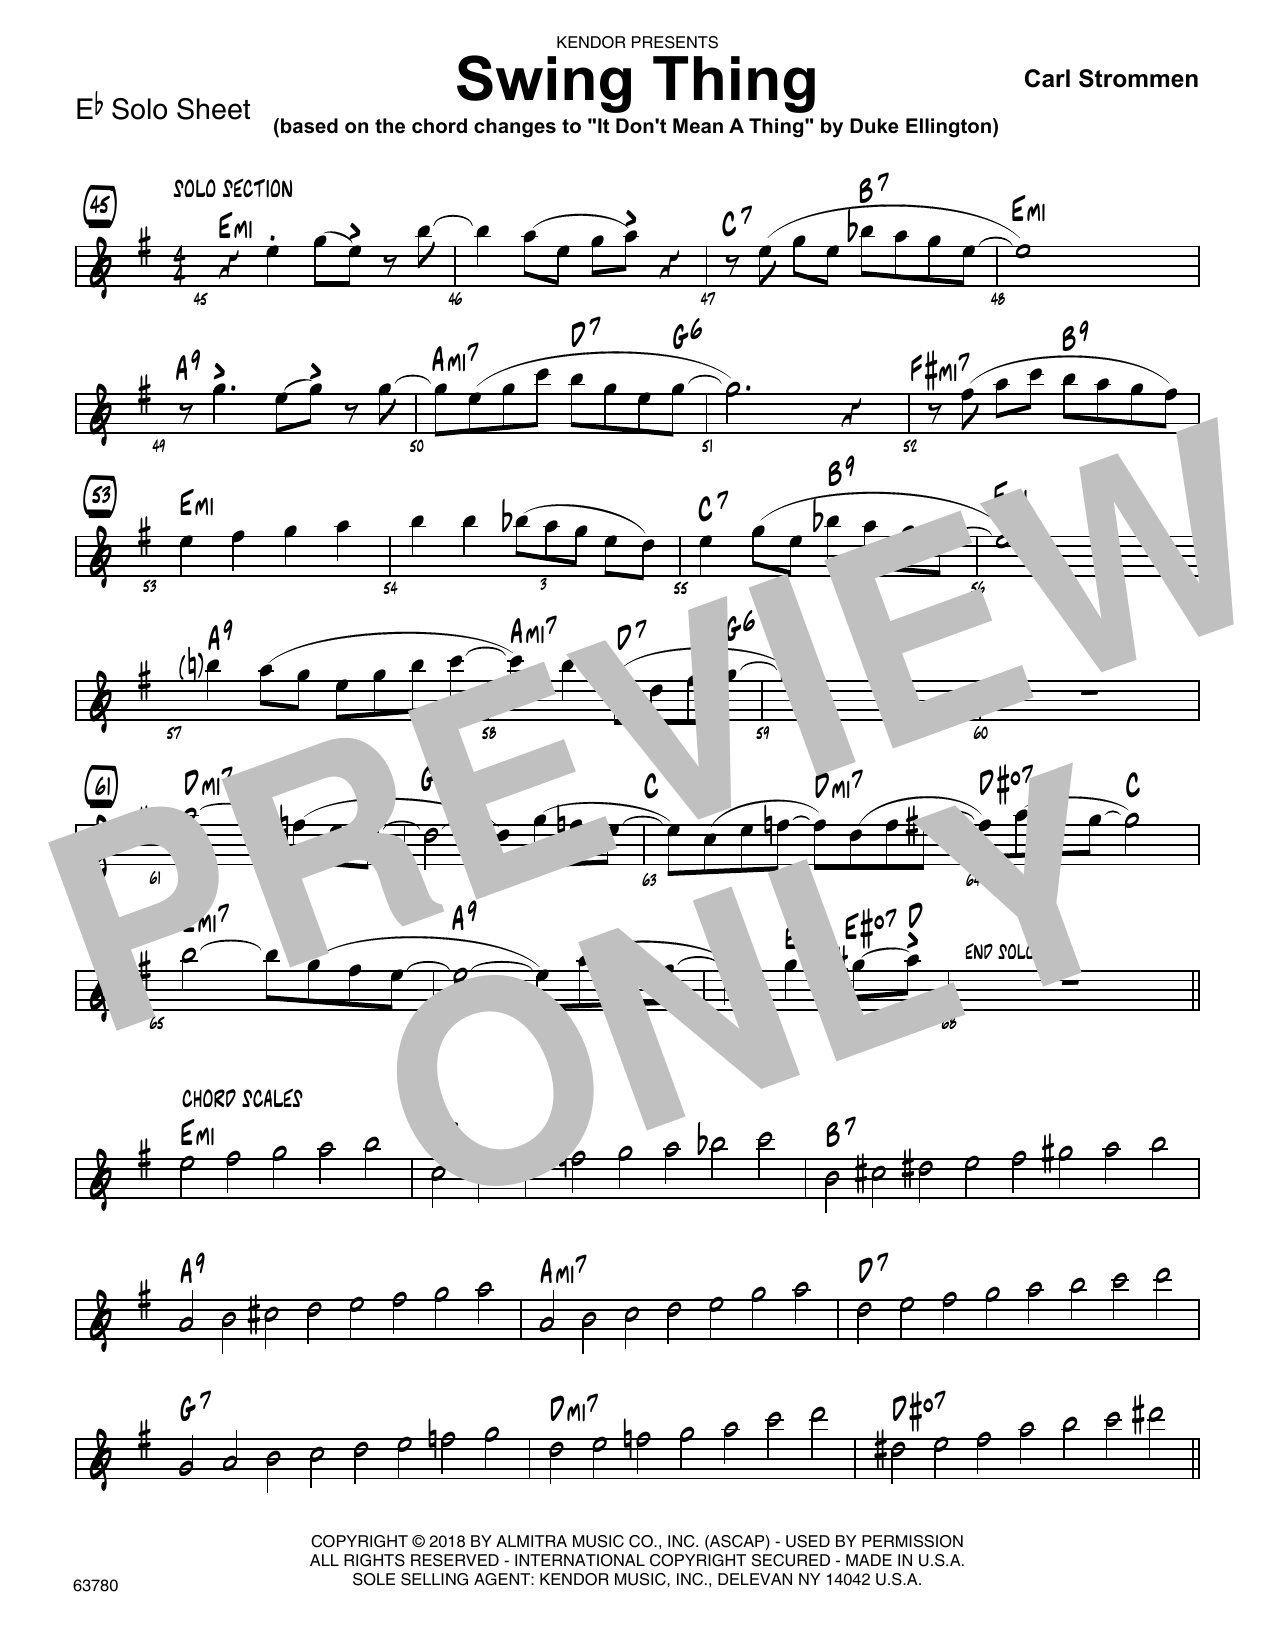 Download Carl Strommen Swing Thing - Eb Solo Sheet Sheet Music